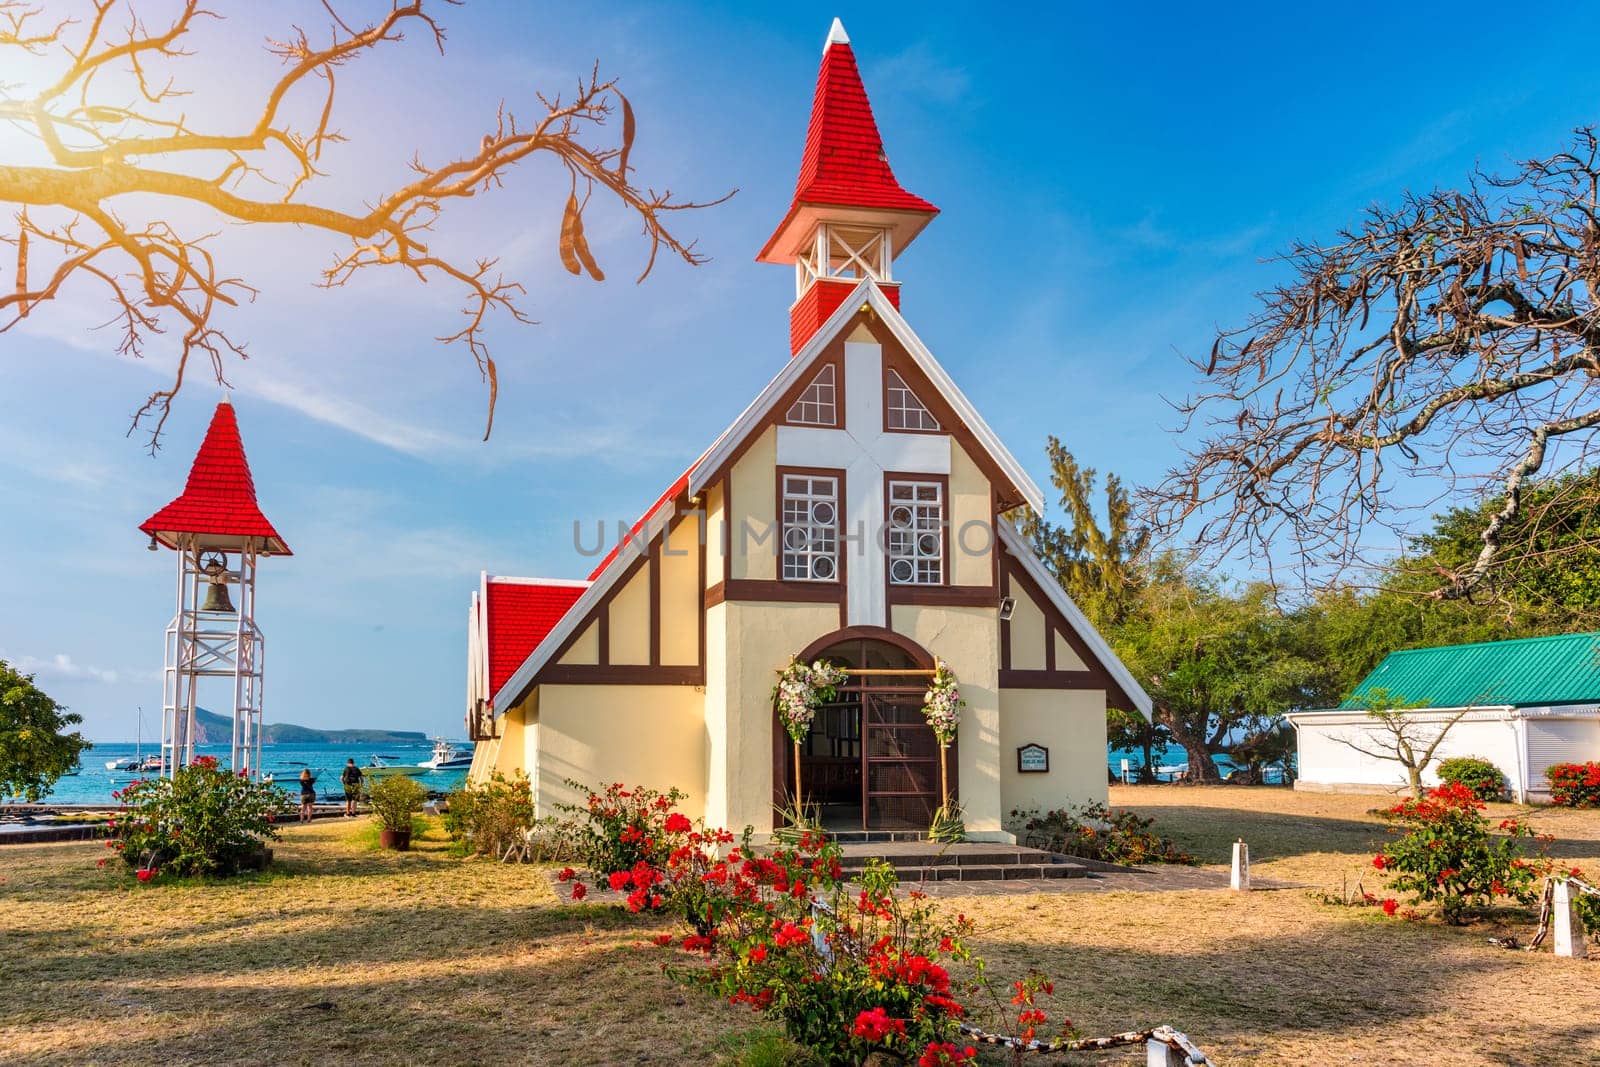 Red church at Cap Malheureux village, Mauritius Island. Notre Dame de Auxiliatrice, rural church with red roof in Cap Malheureux tropical village on Mauritius island, Indian Ocean. by DaLiu